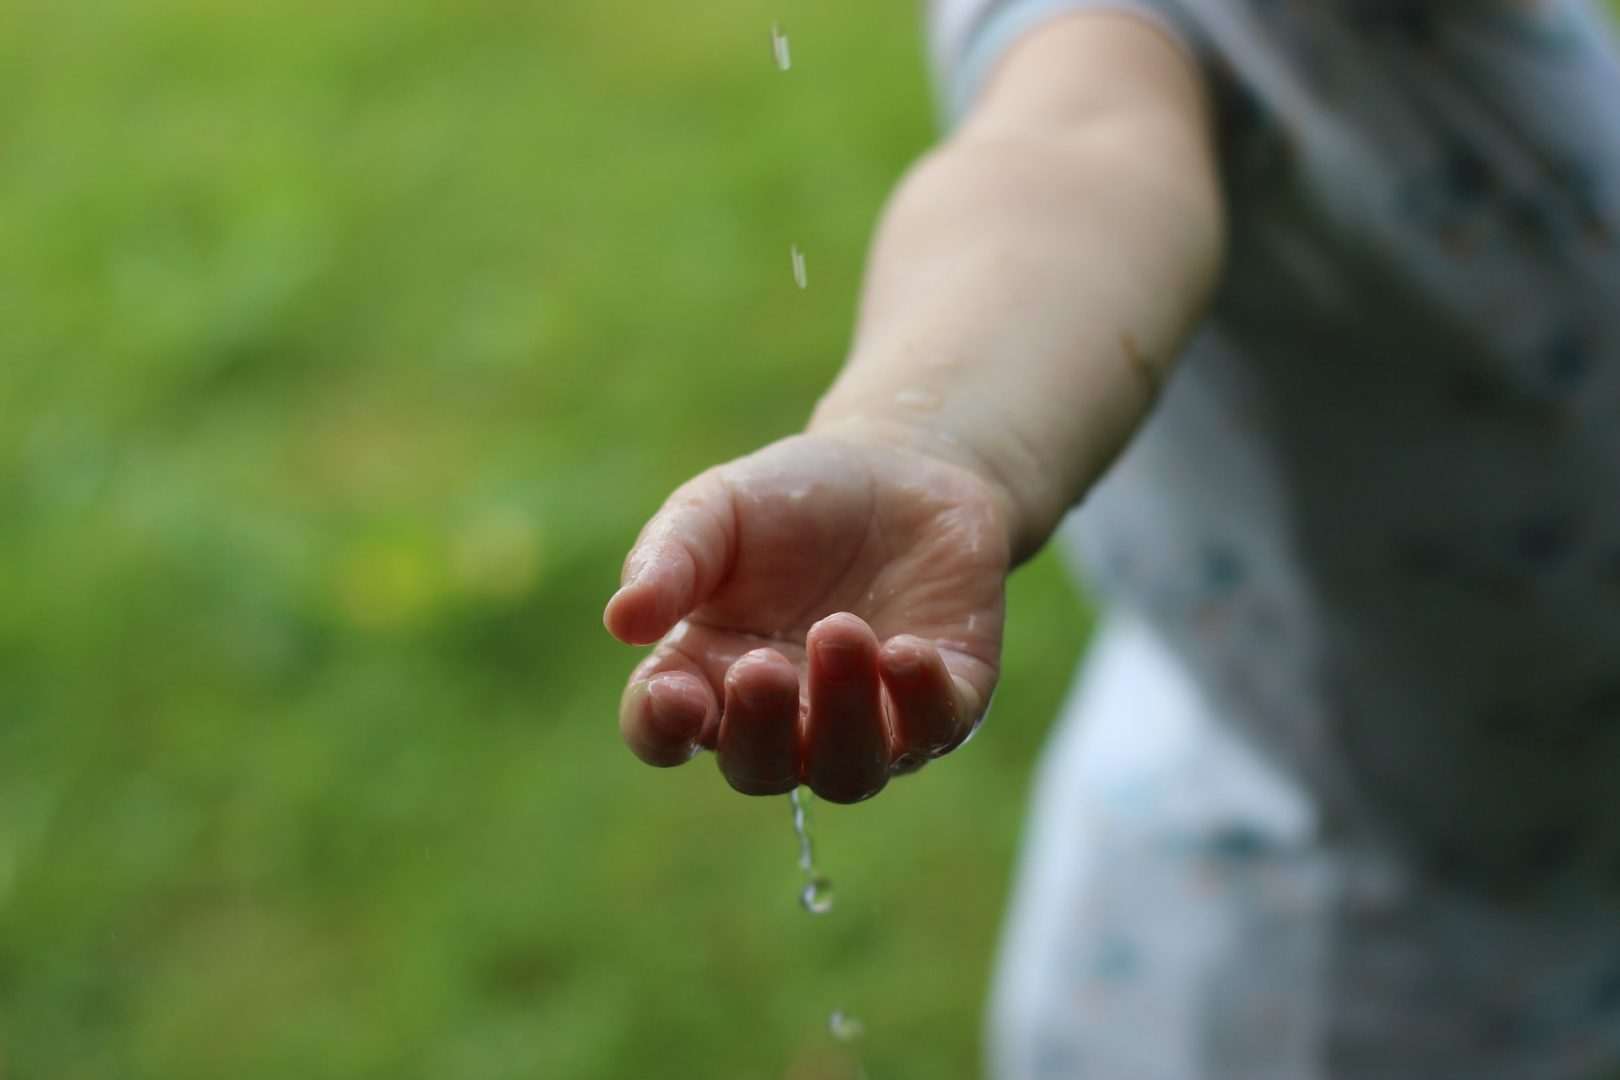 Rain falling on a child's hand